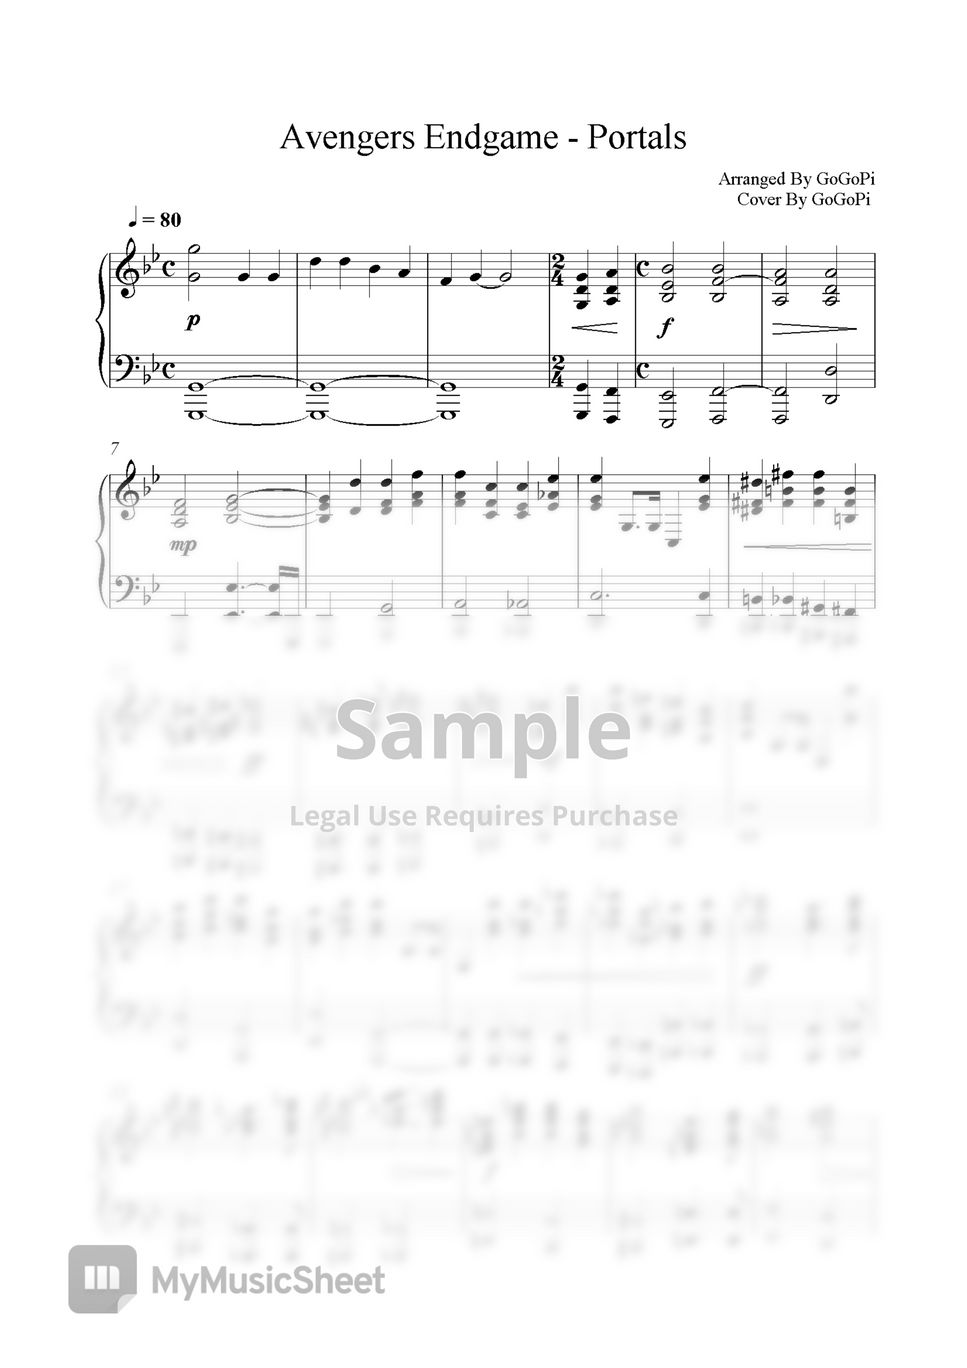 Alan Silvestri - Avengers Endgame OST - Portals (Piano Version) by GoGoPiano